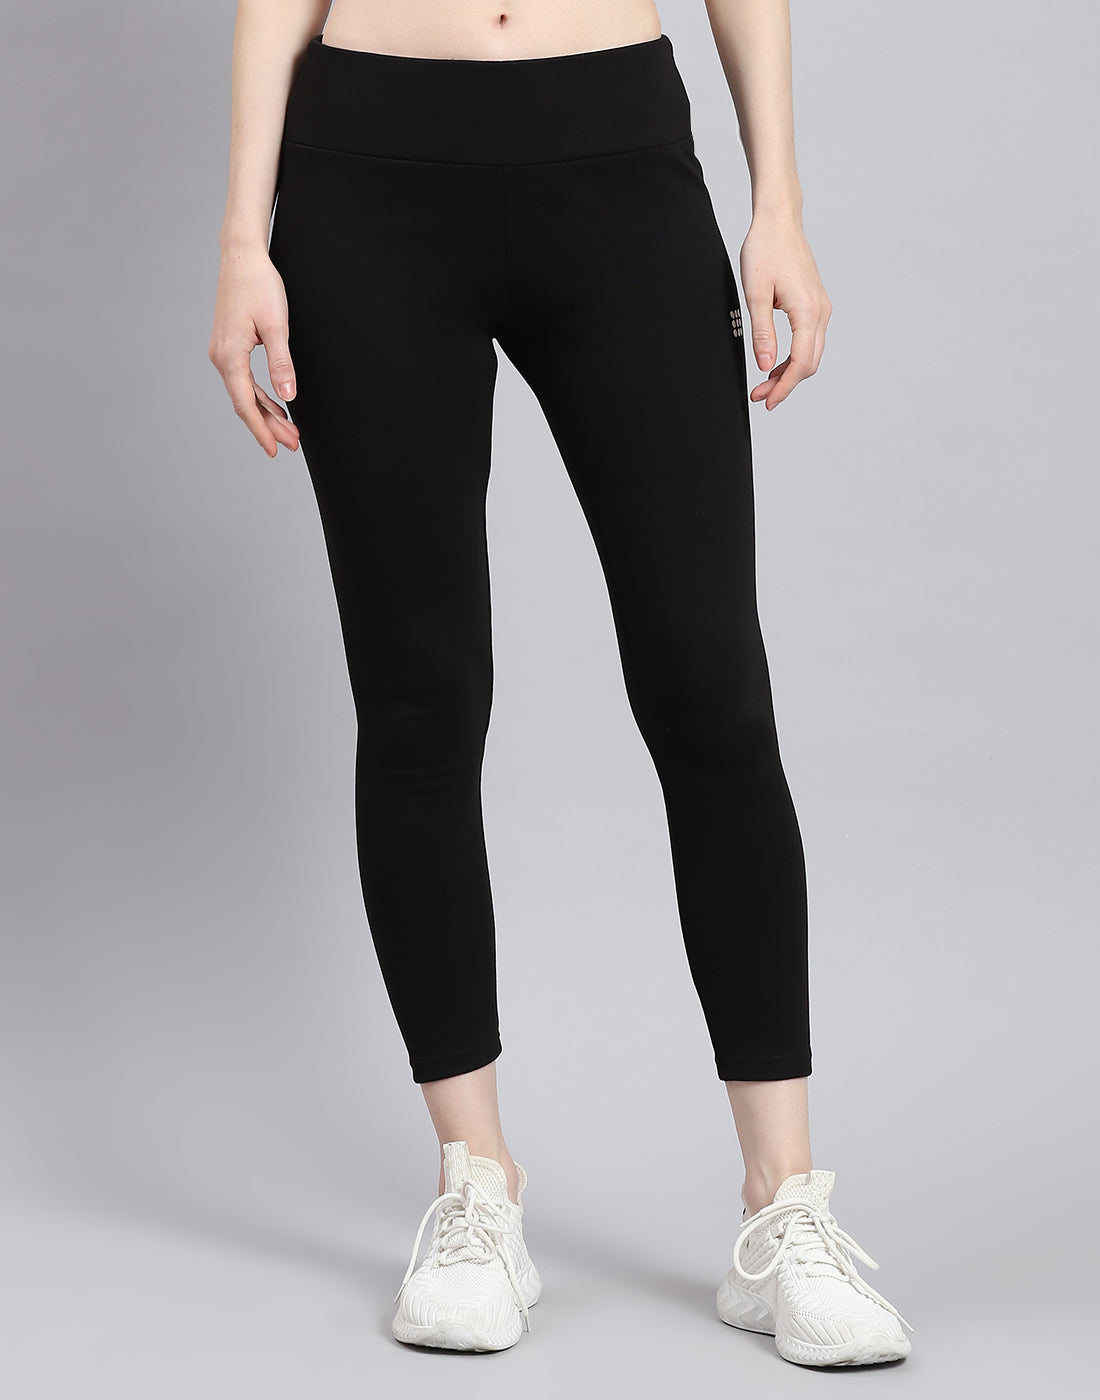 Buy Women Black Solid Regular Fit Yoga Pant Online in India - Rock.it